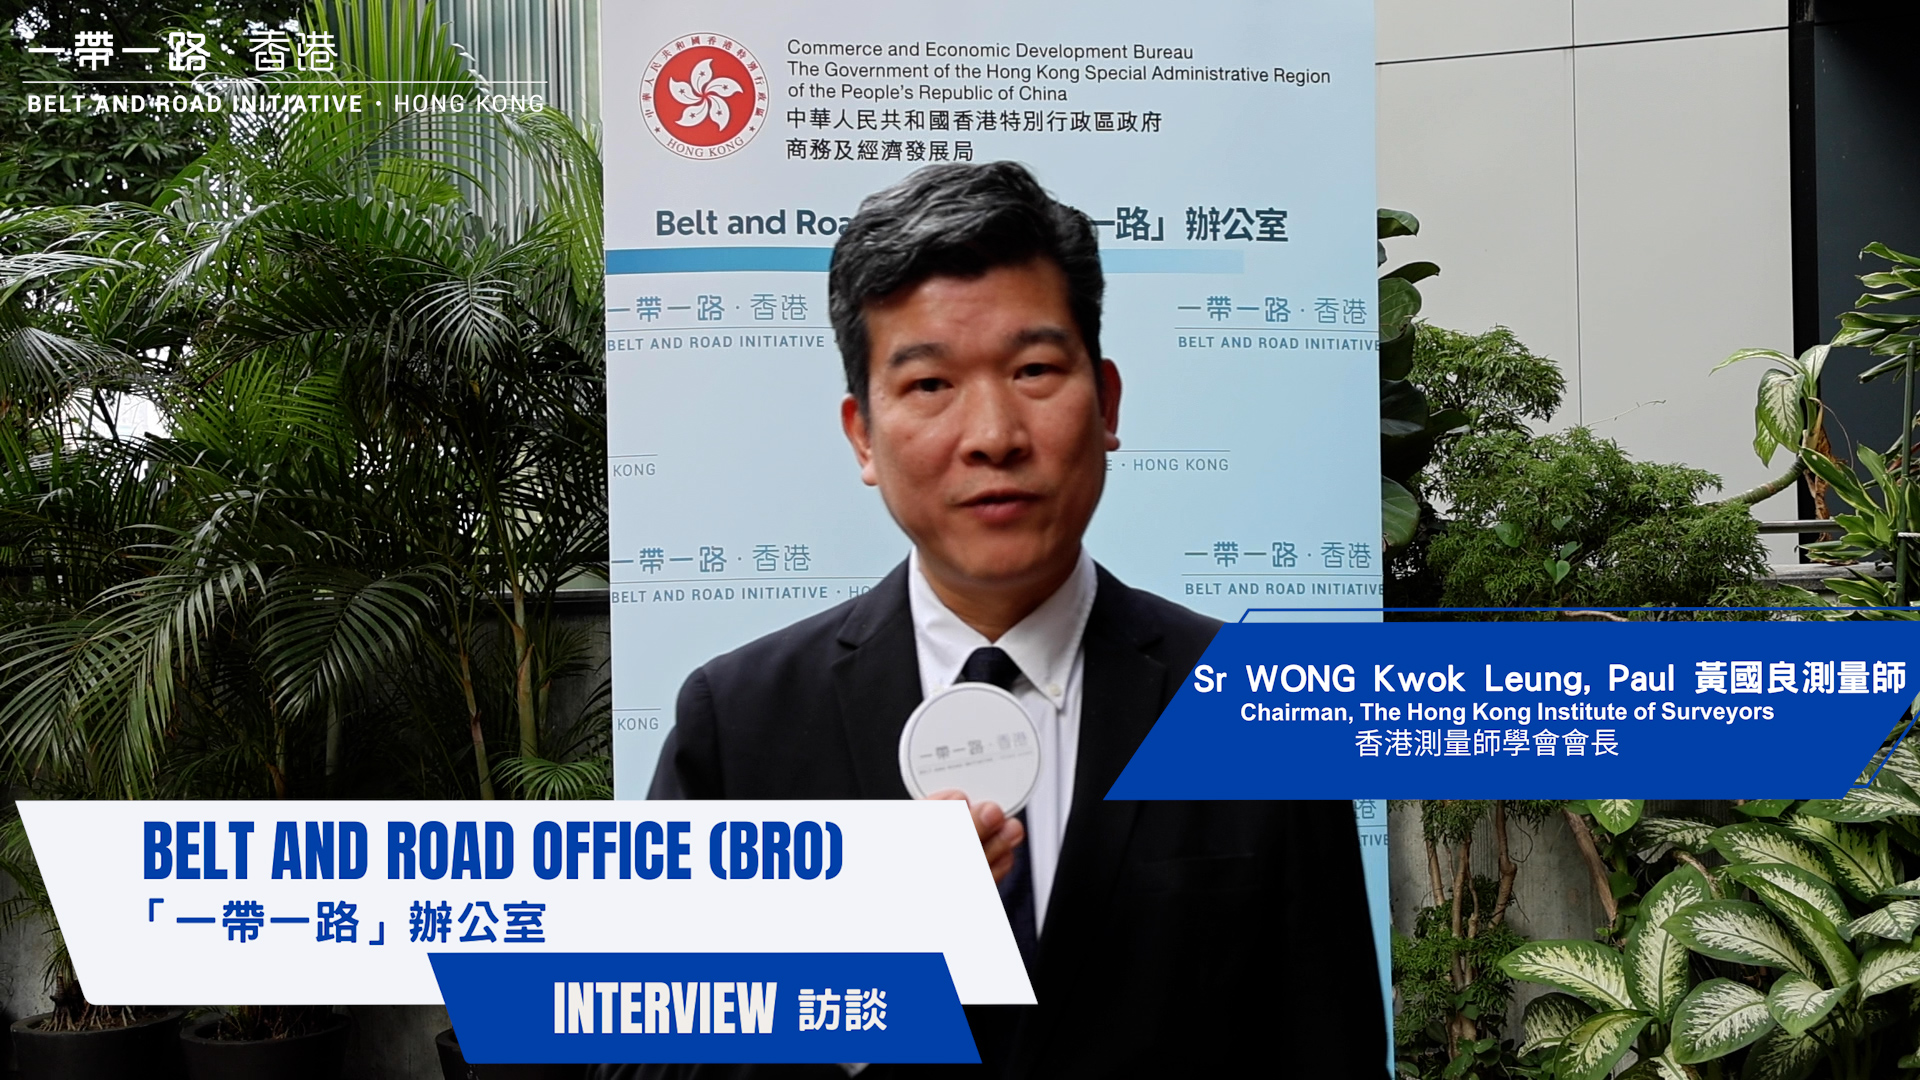 Interview with Sr WONG Kwok Leung, Paul